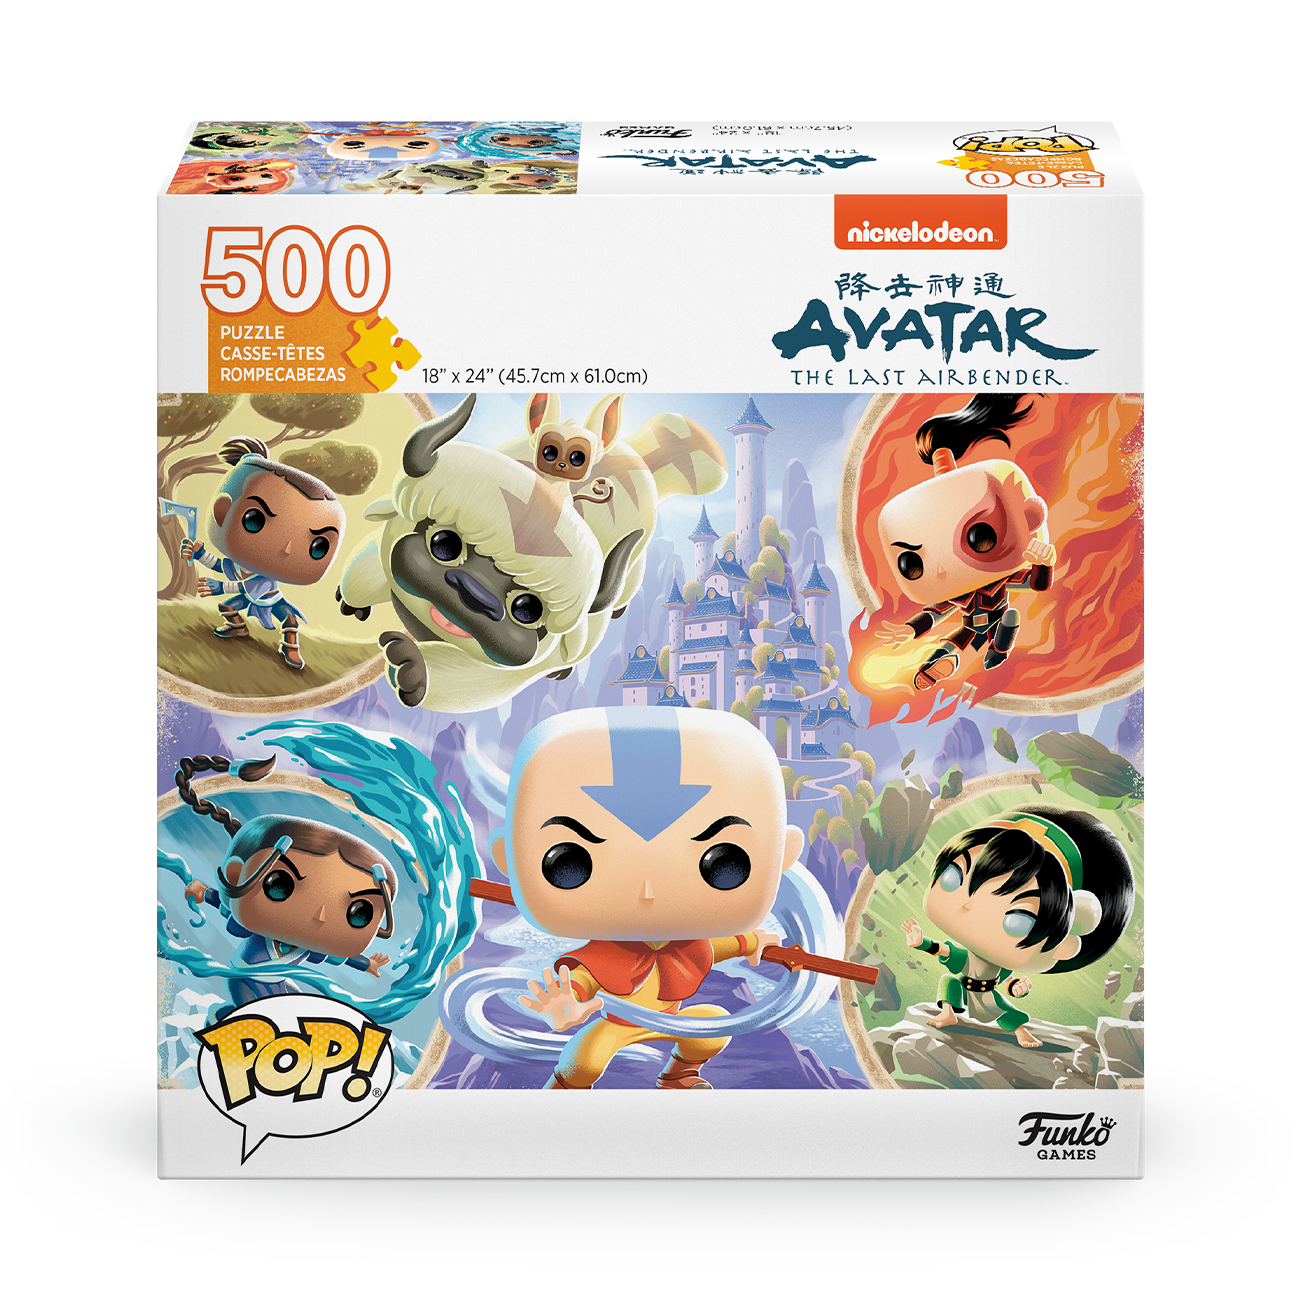 FUNKO GAMES Pop! Puzzle - Avatar The Last Airbender (500 Piece)